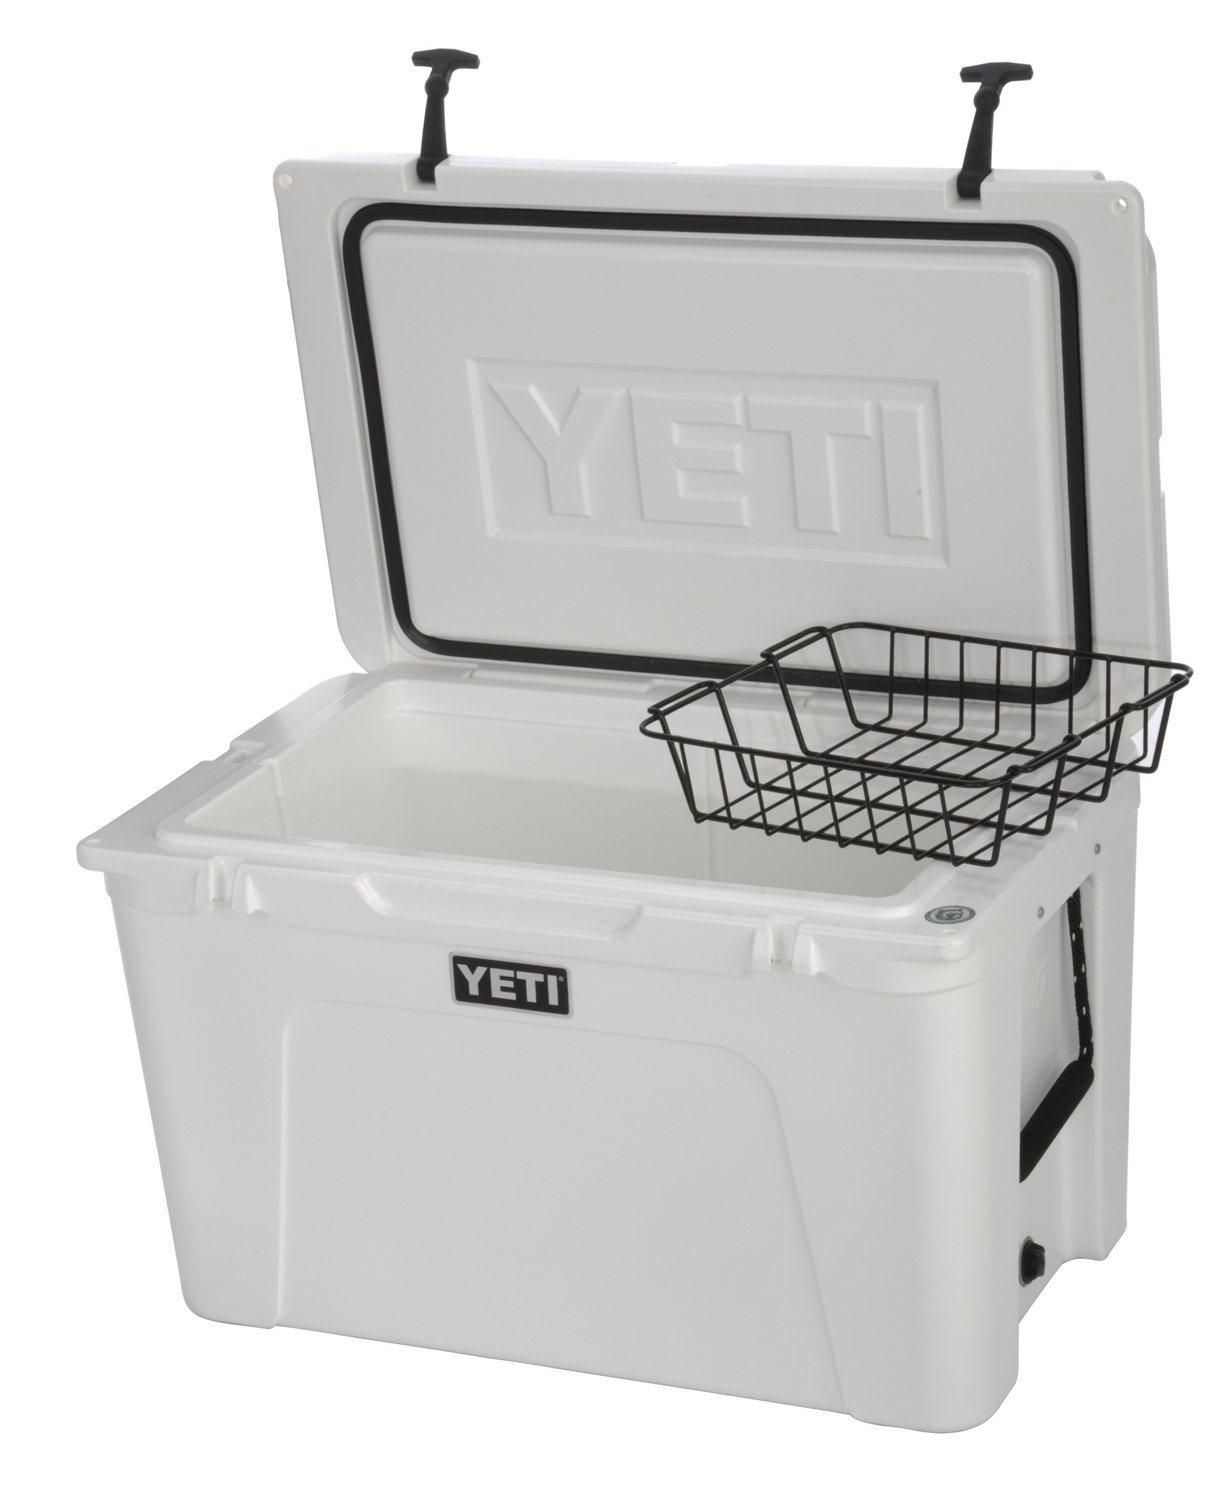 YETI Tundra 65 Cooler  Free Shipping at Academy